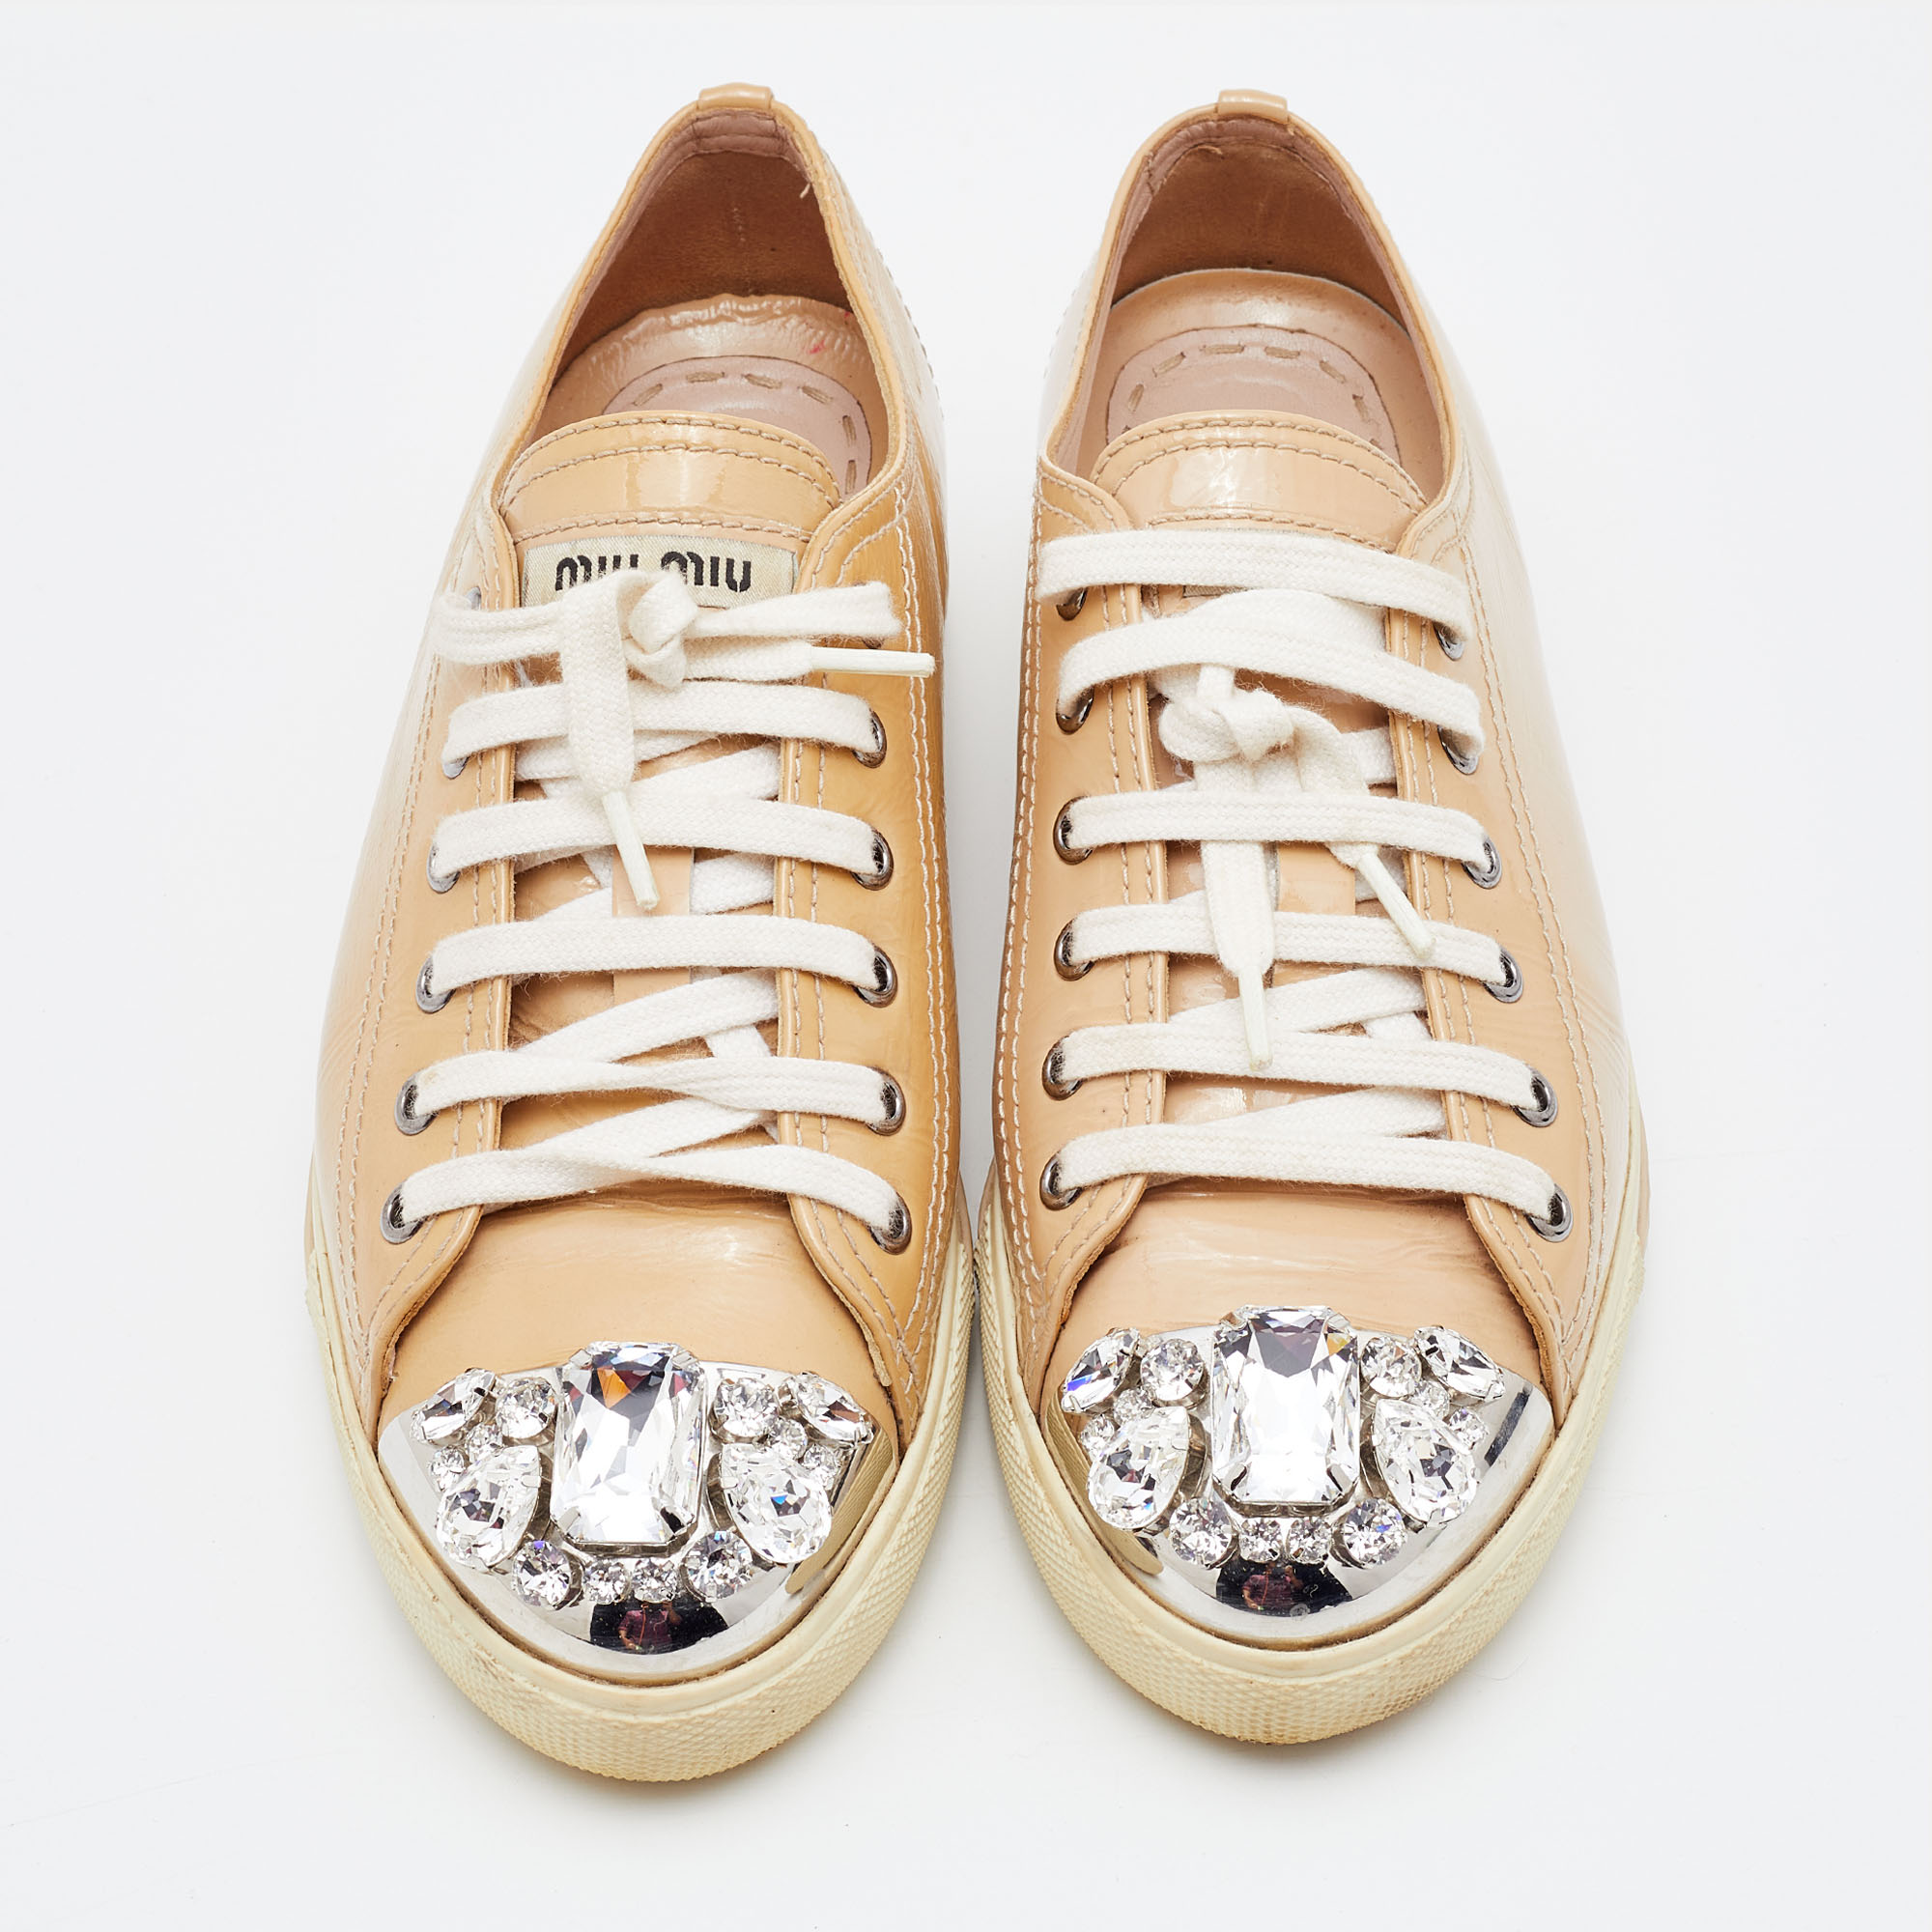 Miu Miu Beige Patent Leather Crystal Embellished Cap Toe Sneakers Size 38.5